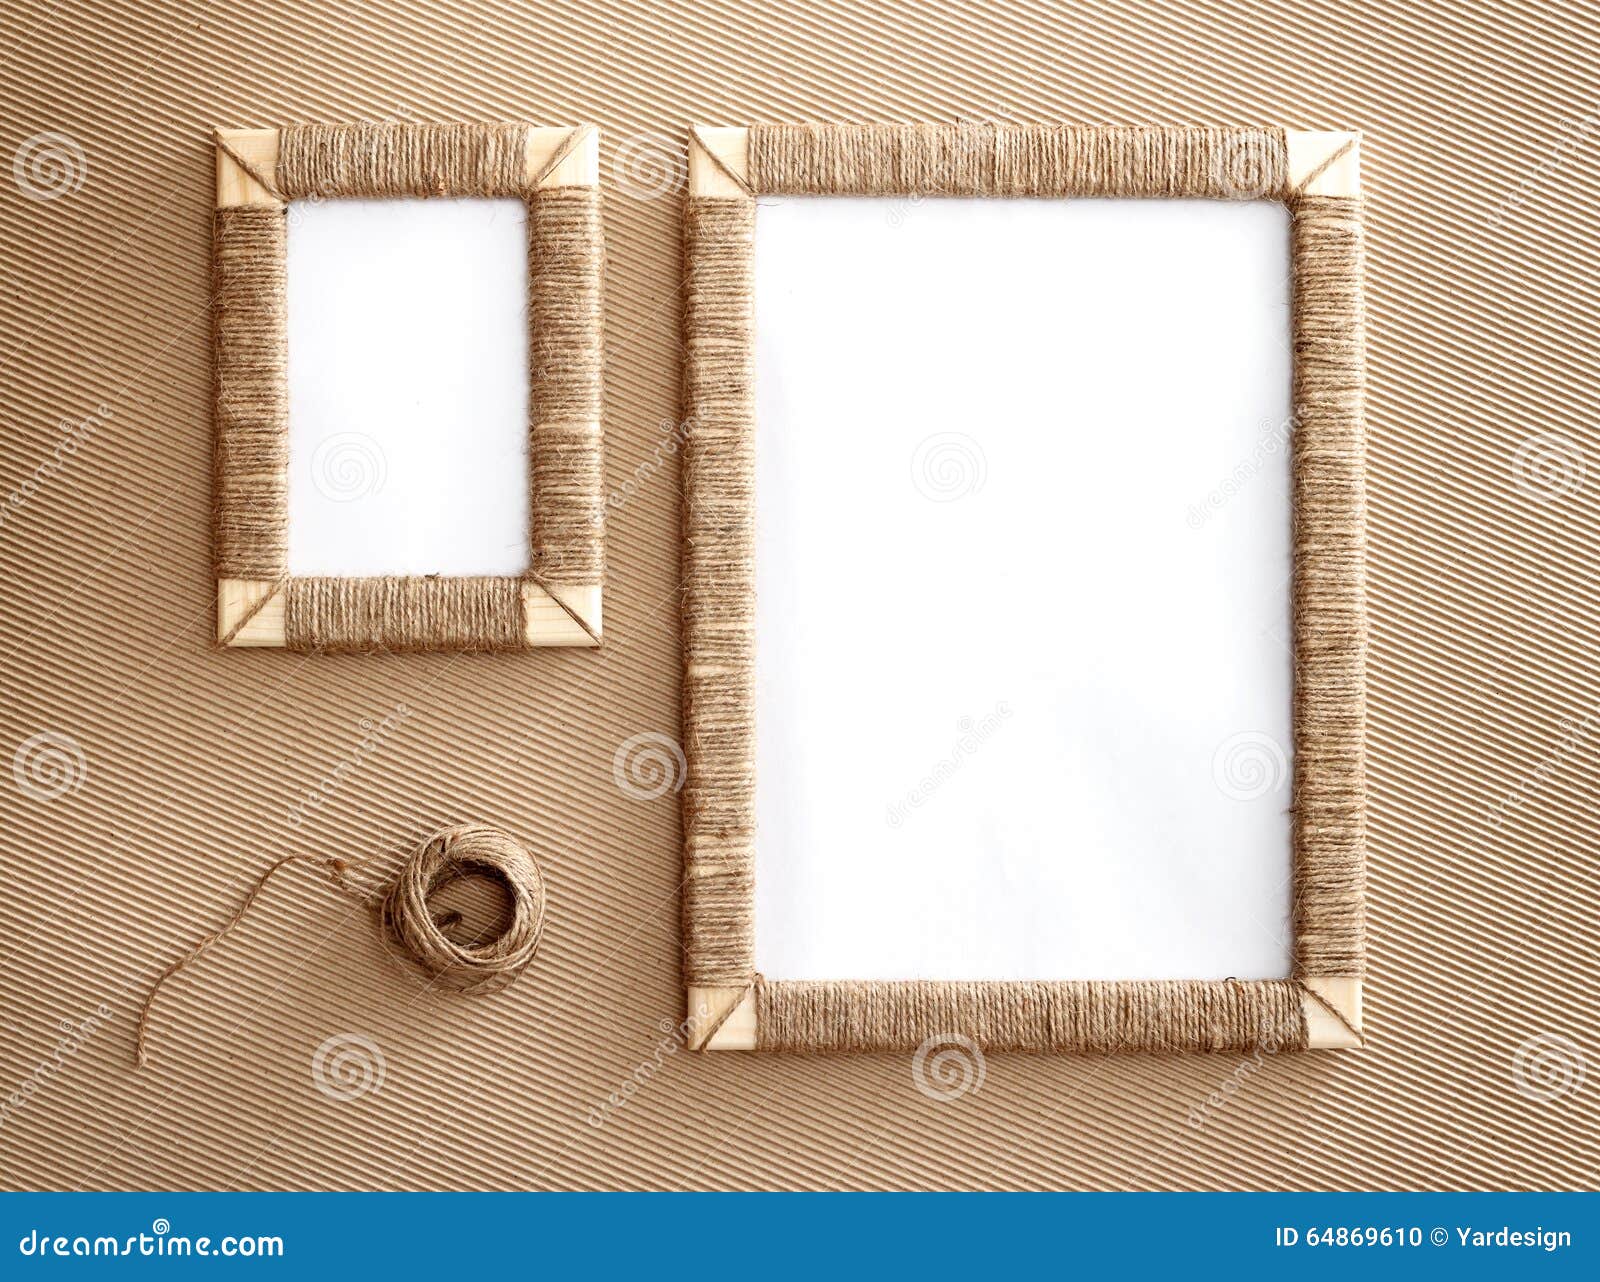 Two Handmade Photo Frames Braided Jute Against Corrugated ...